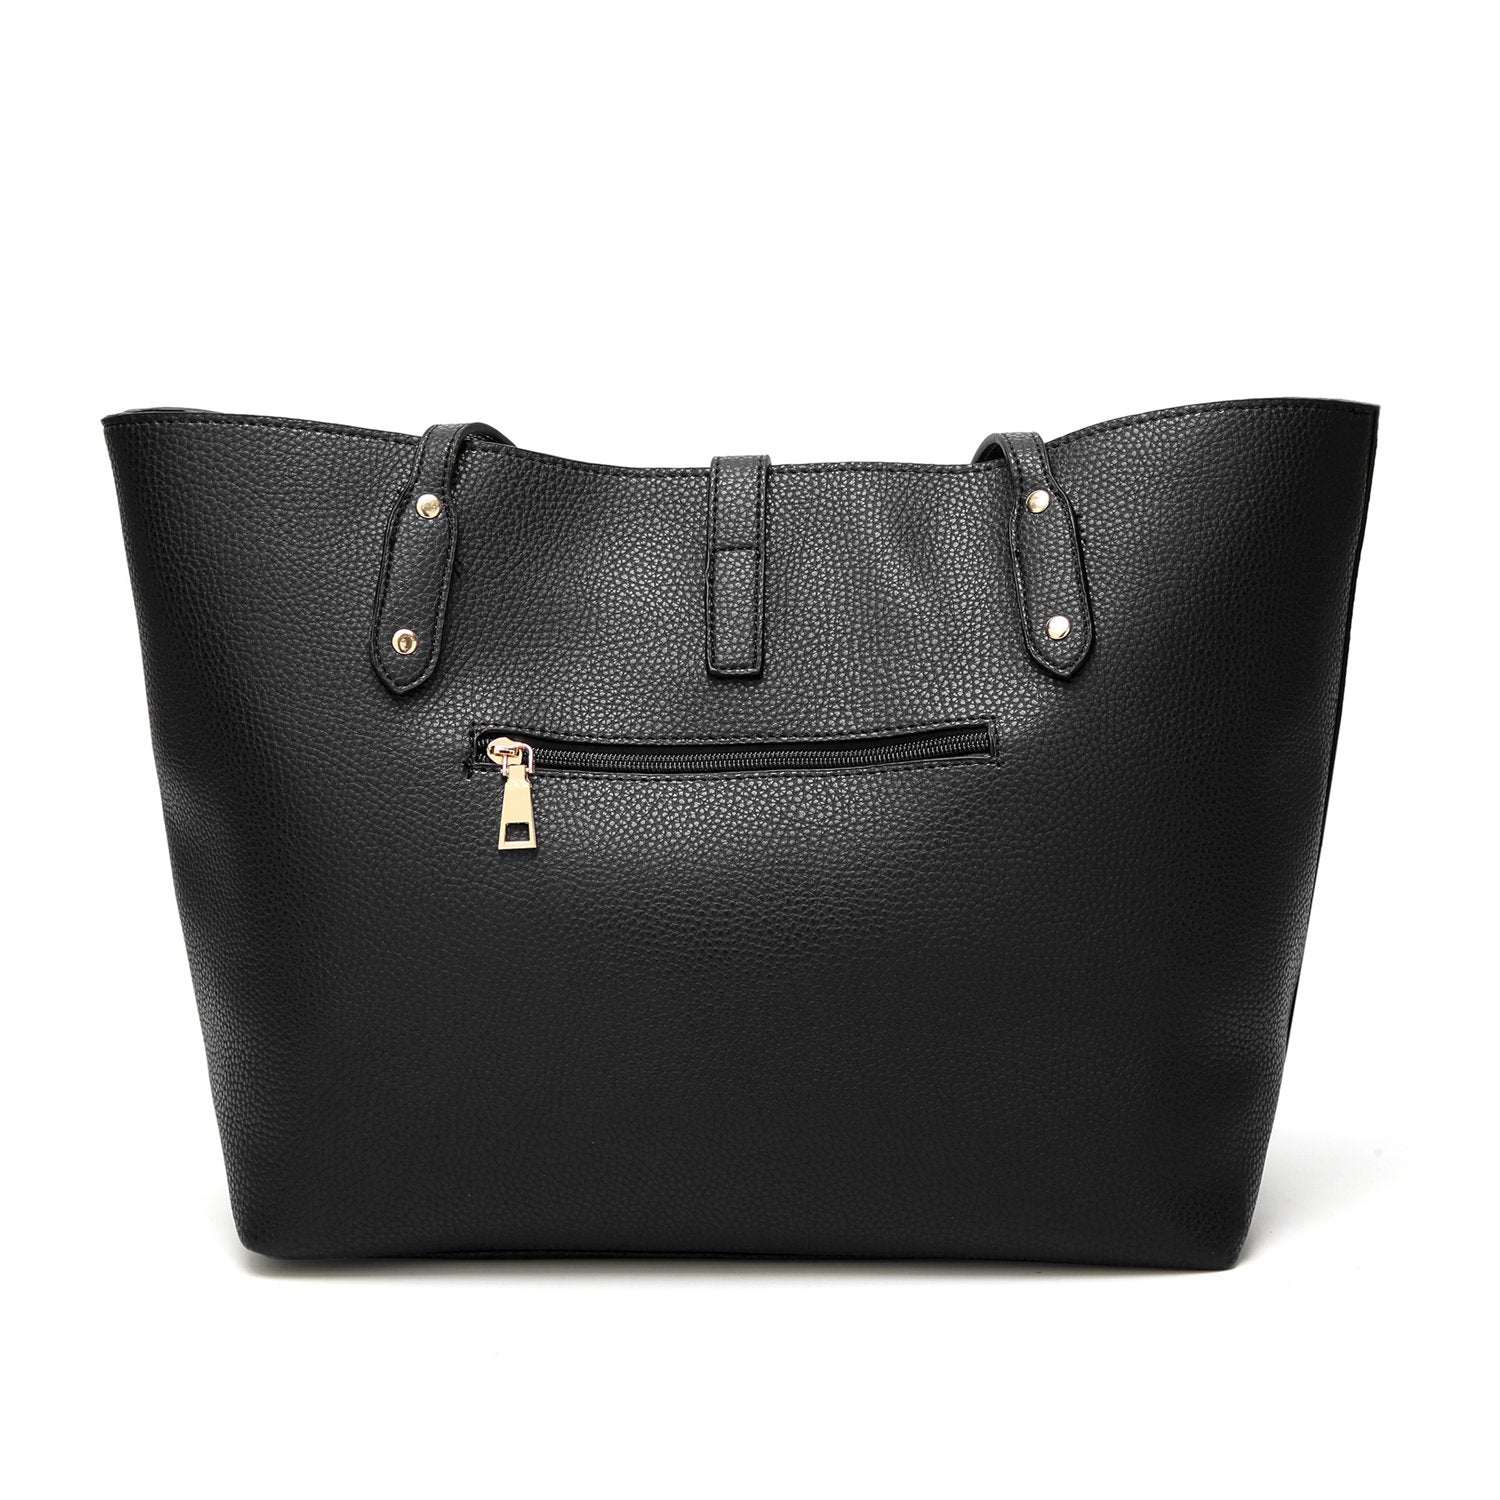 Satchel Purses And Handbags For Women Shoulder Tote Bags Wallets - ebowsos